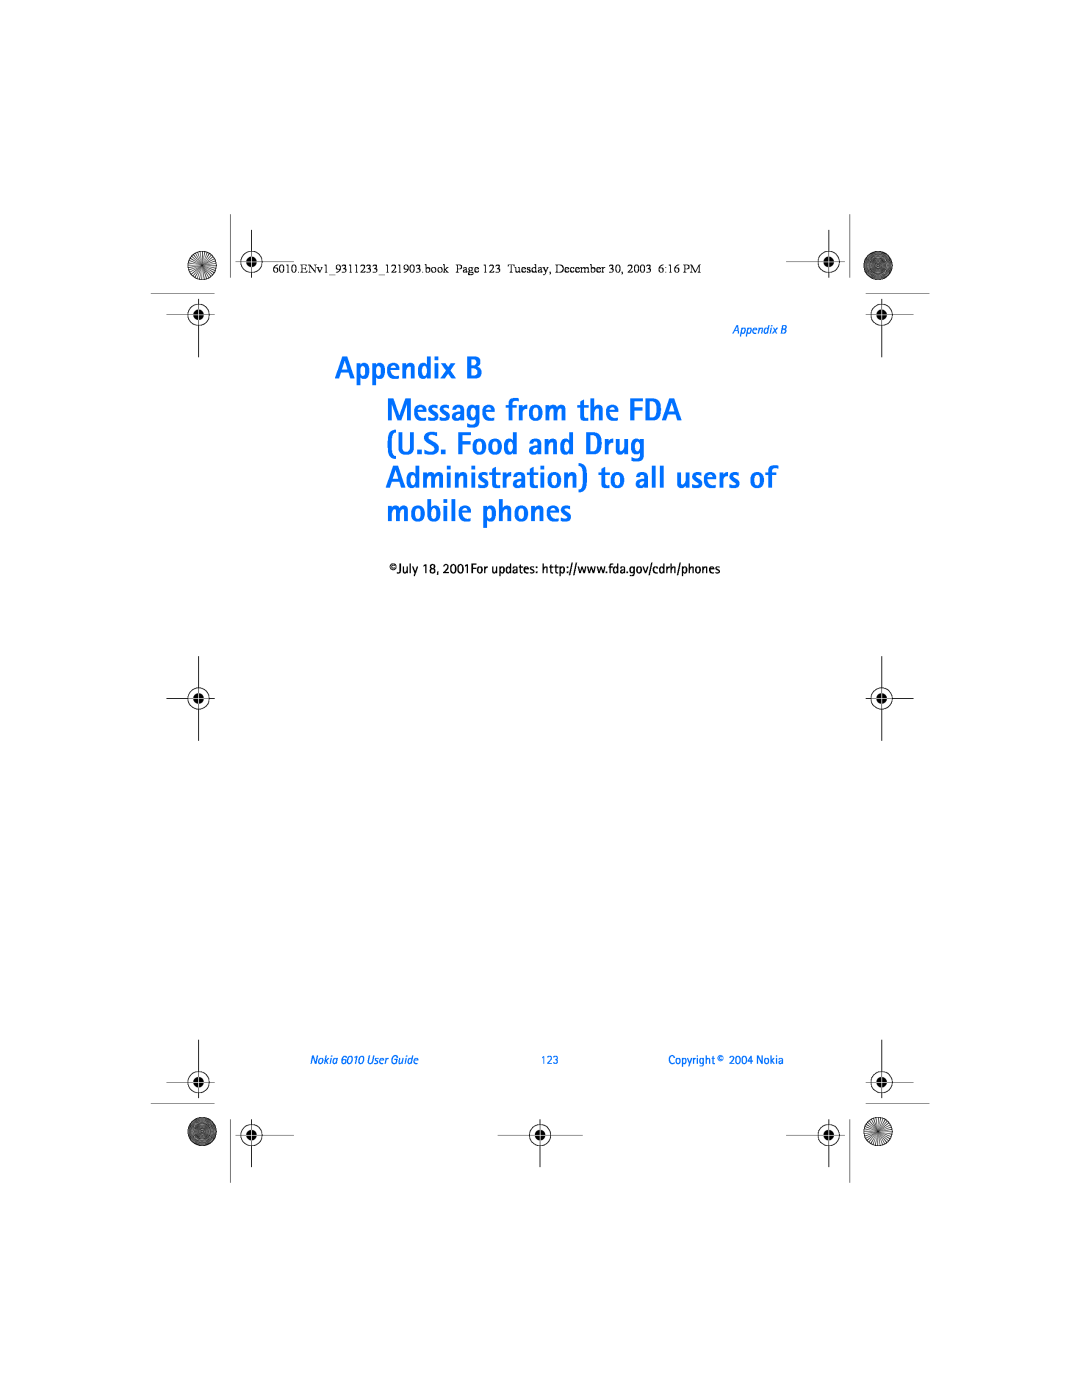 Nokia manual Appendix B, Nokia 6010 User Guide, Copyright 2004 Nokia 